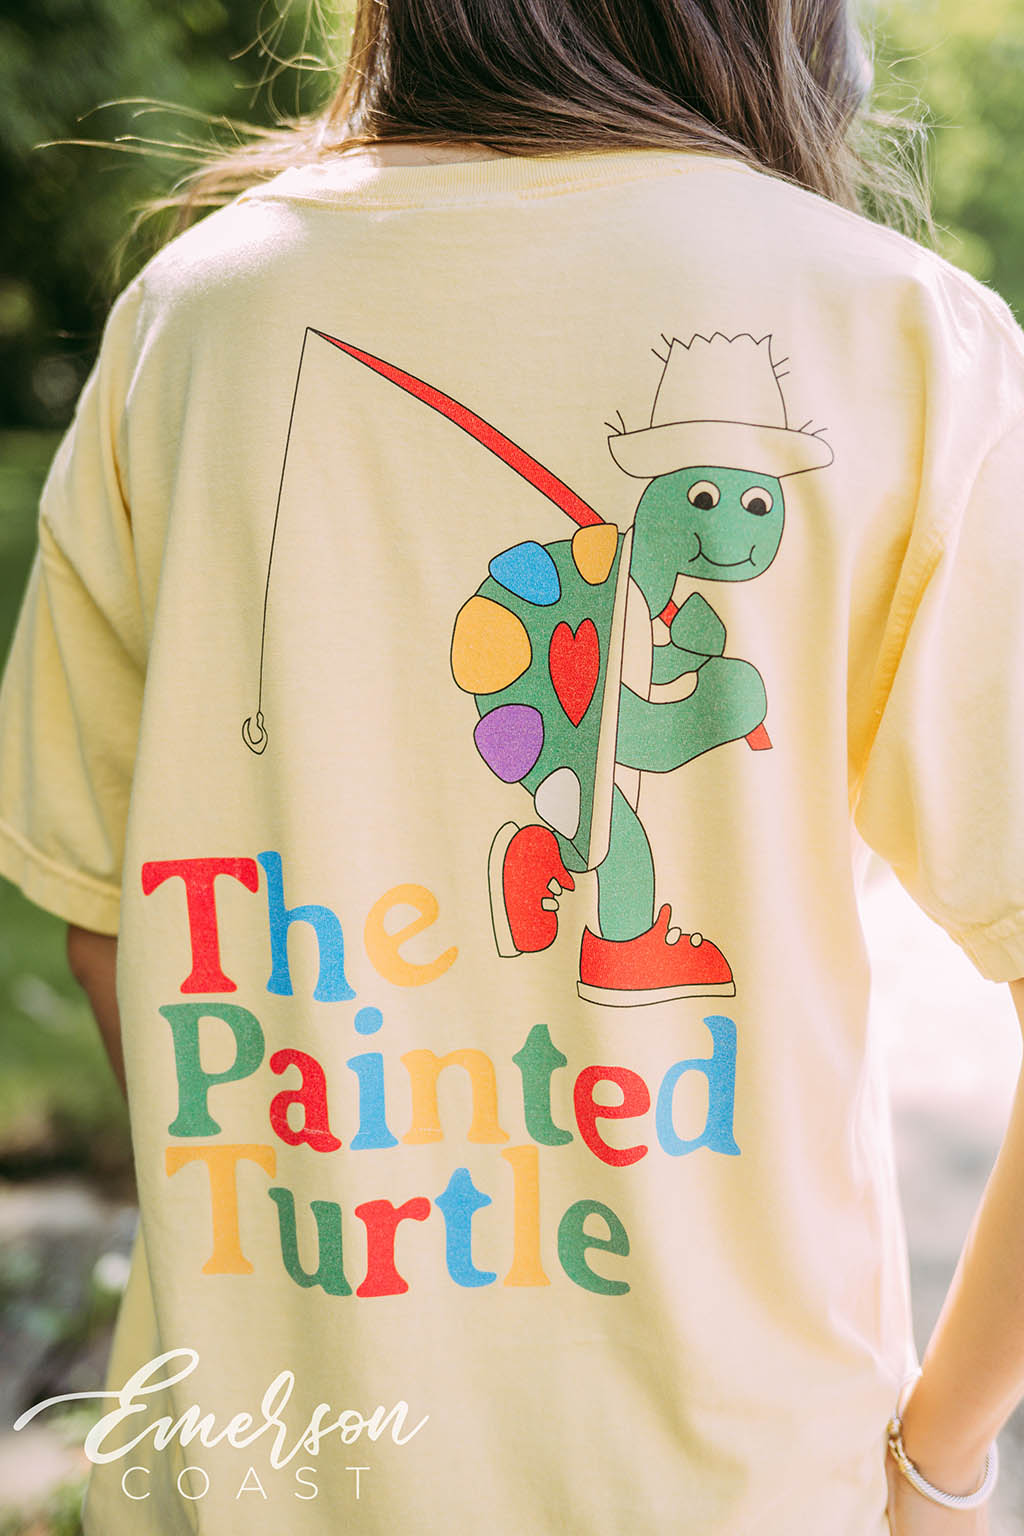 Delta Zeta Philanthropy Painted Turtle Tee